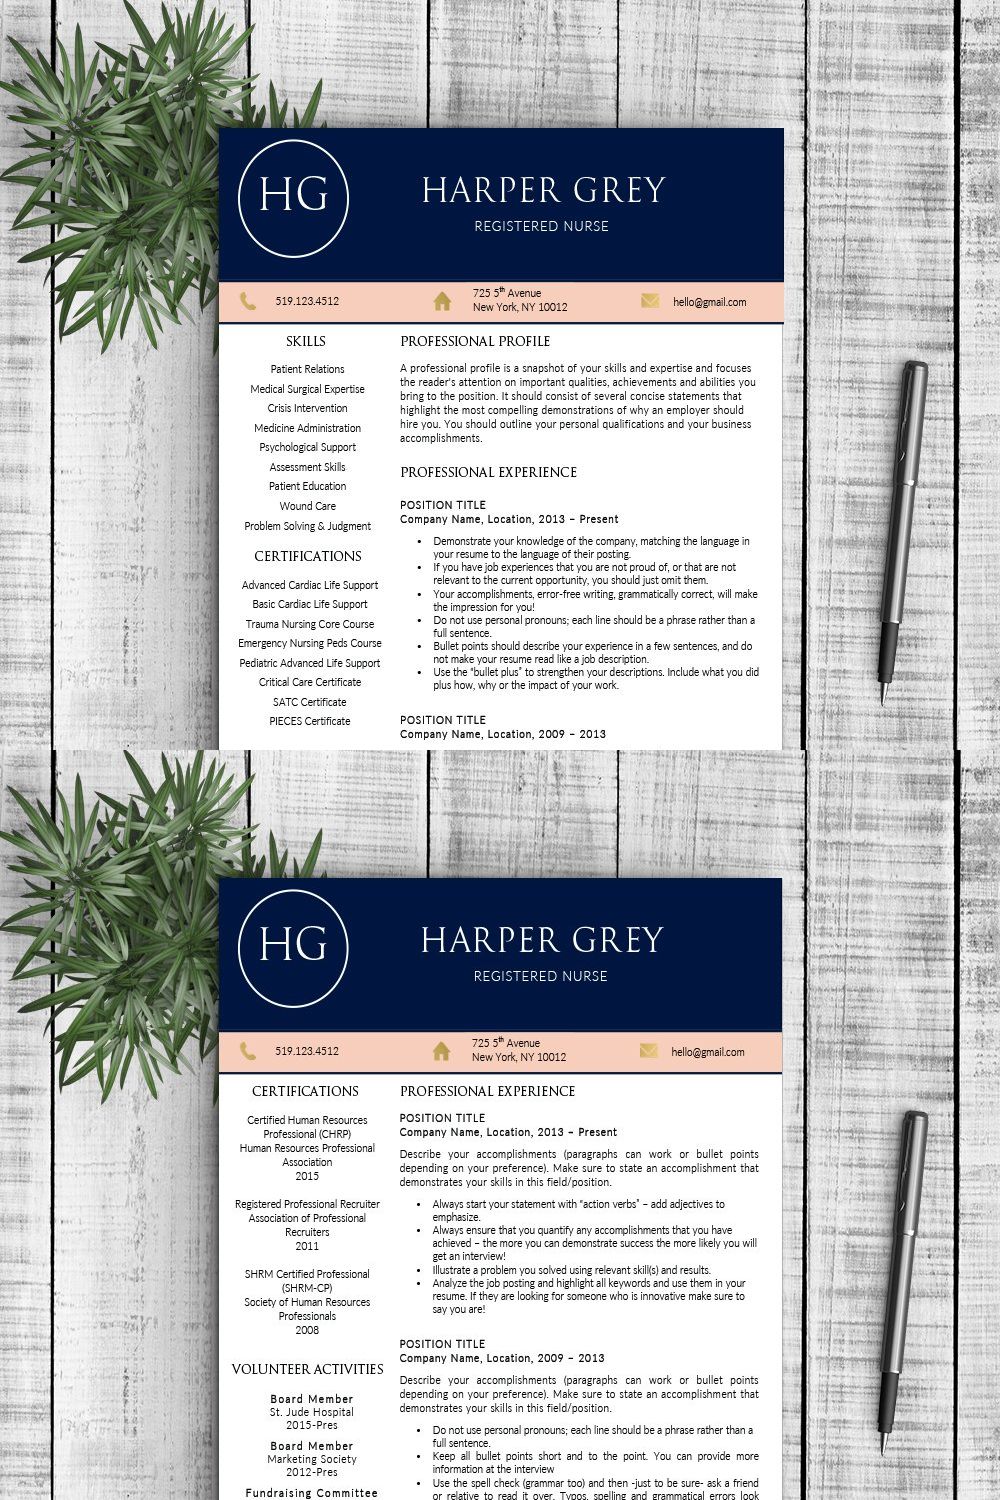 Resume Template - Harper G pinterest preview image.